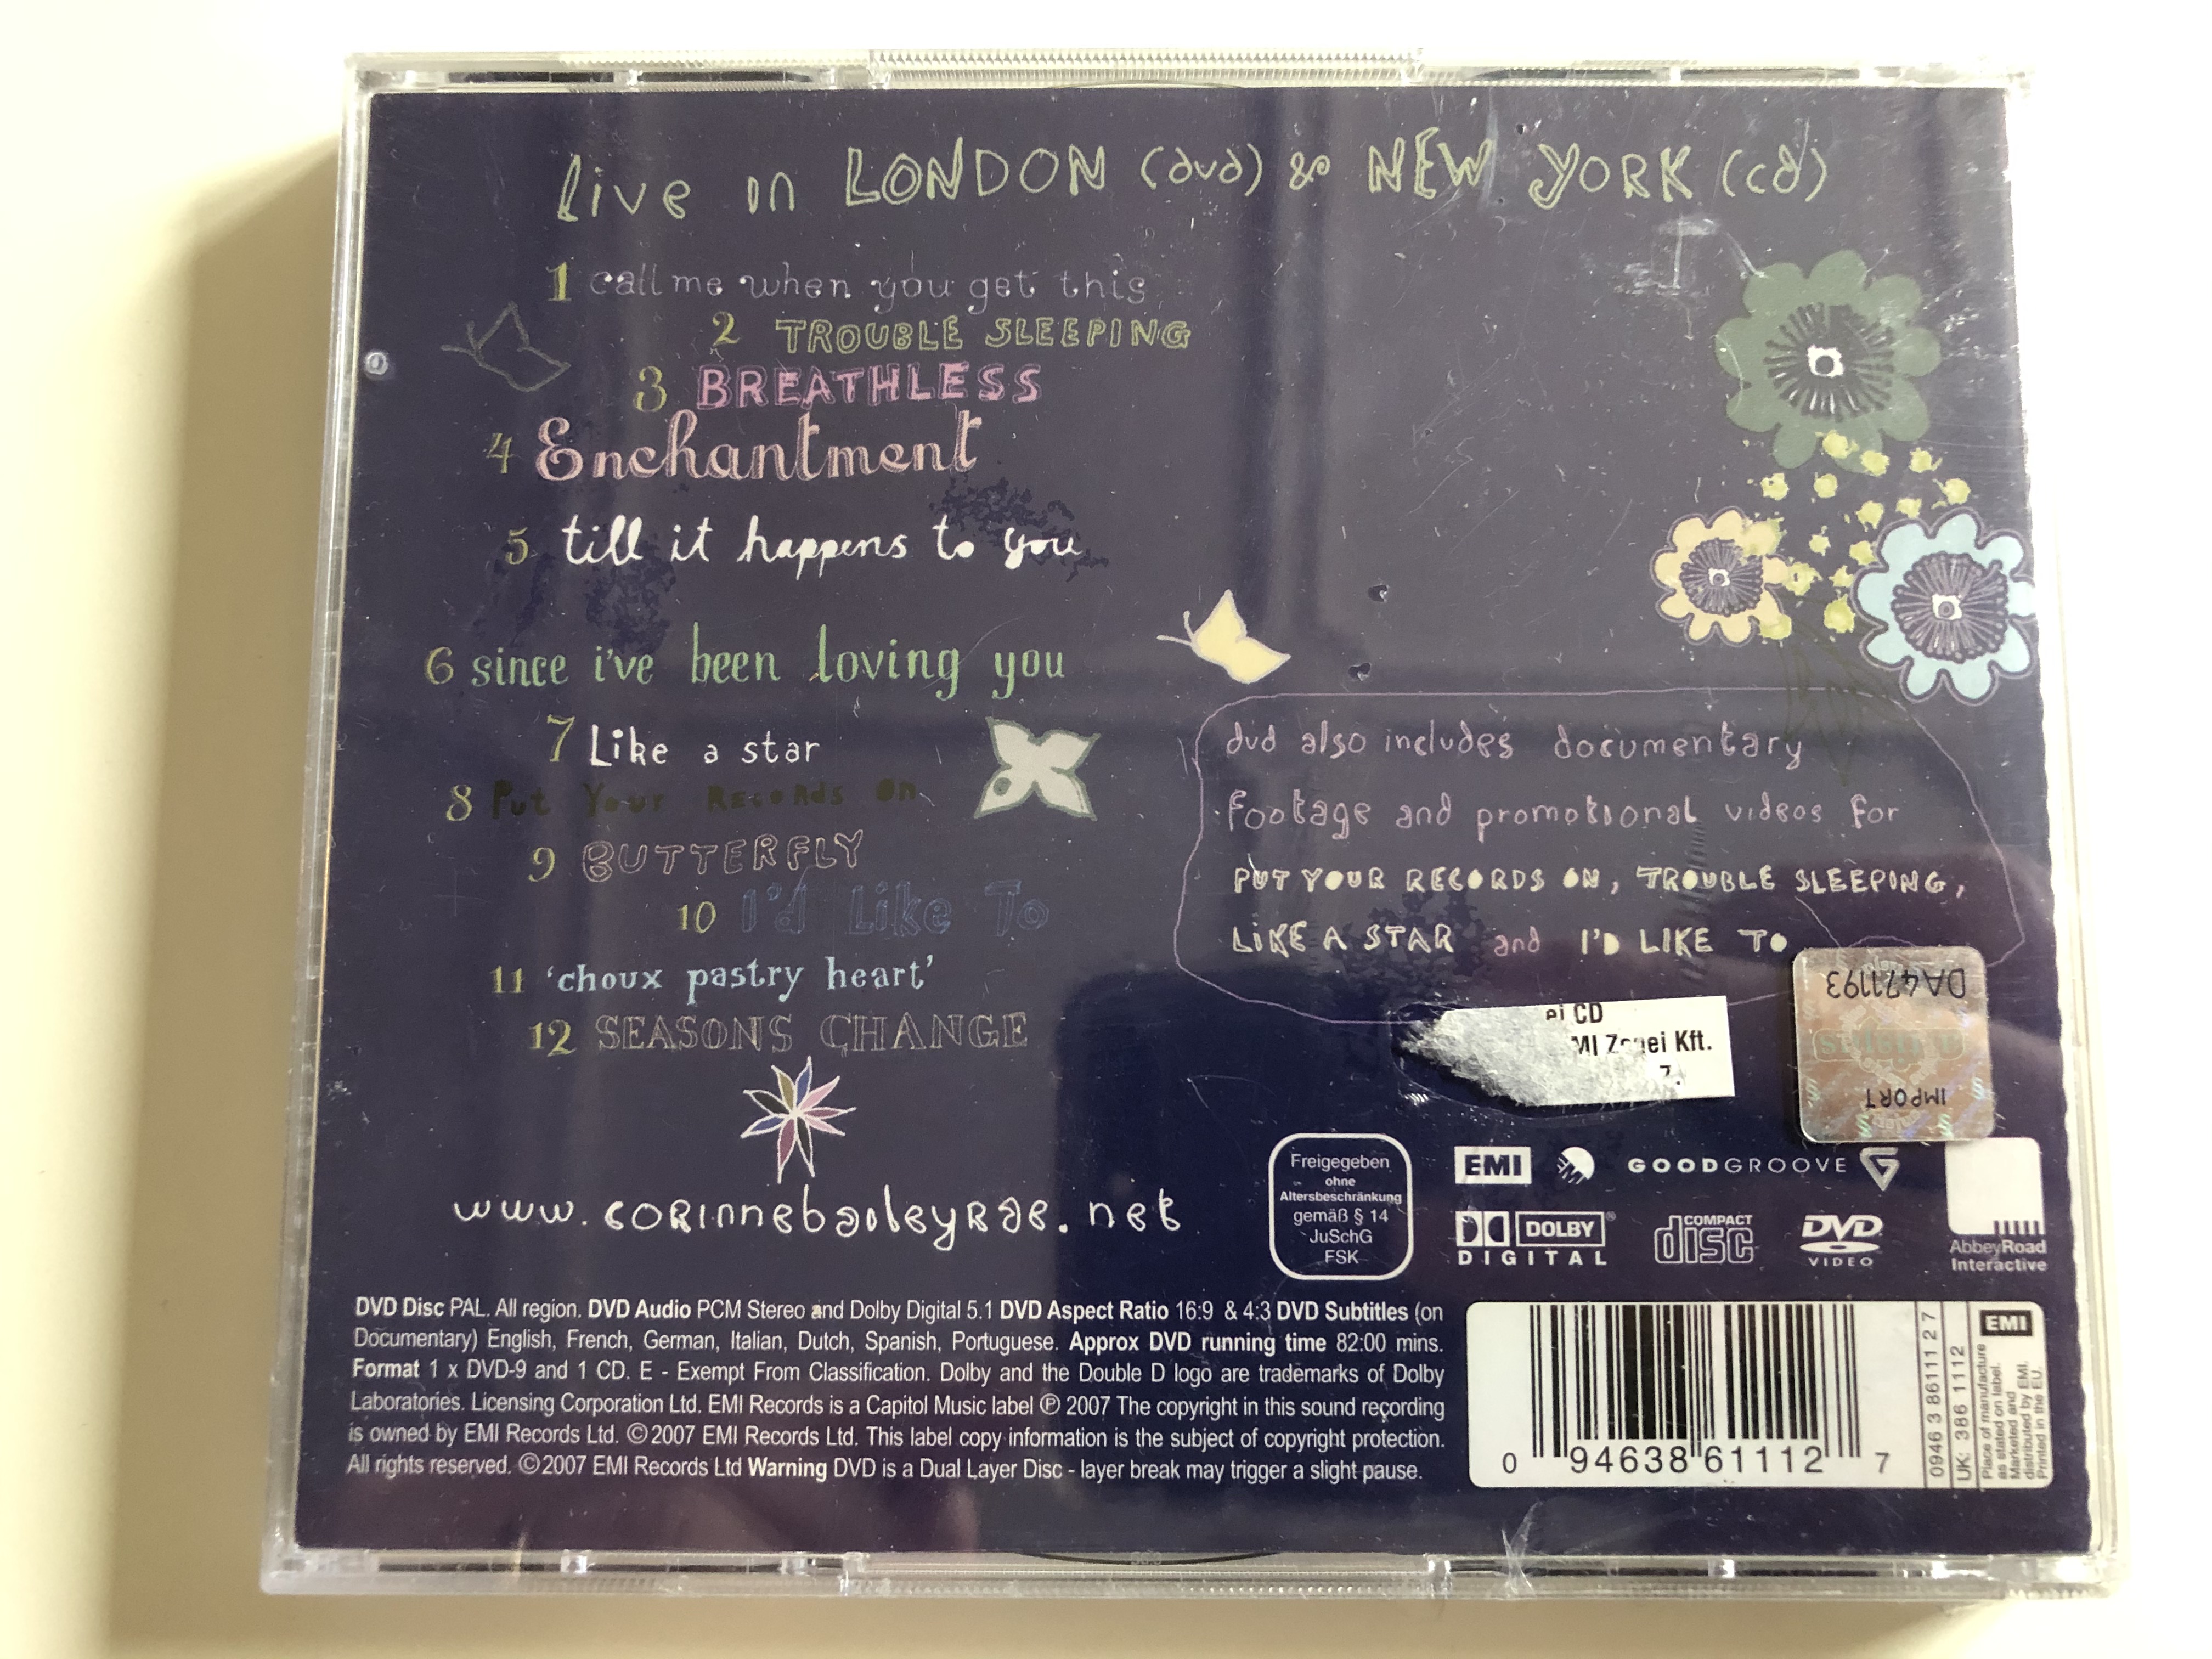 corinne-bailey-rae-live-in-london-new-york-emi-records-audio-dvd-cd-2007-387-5089-2-.jpg